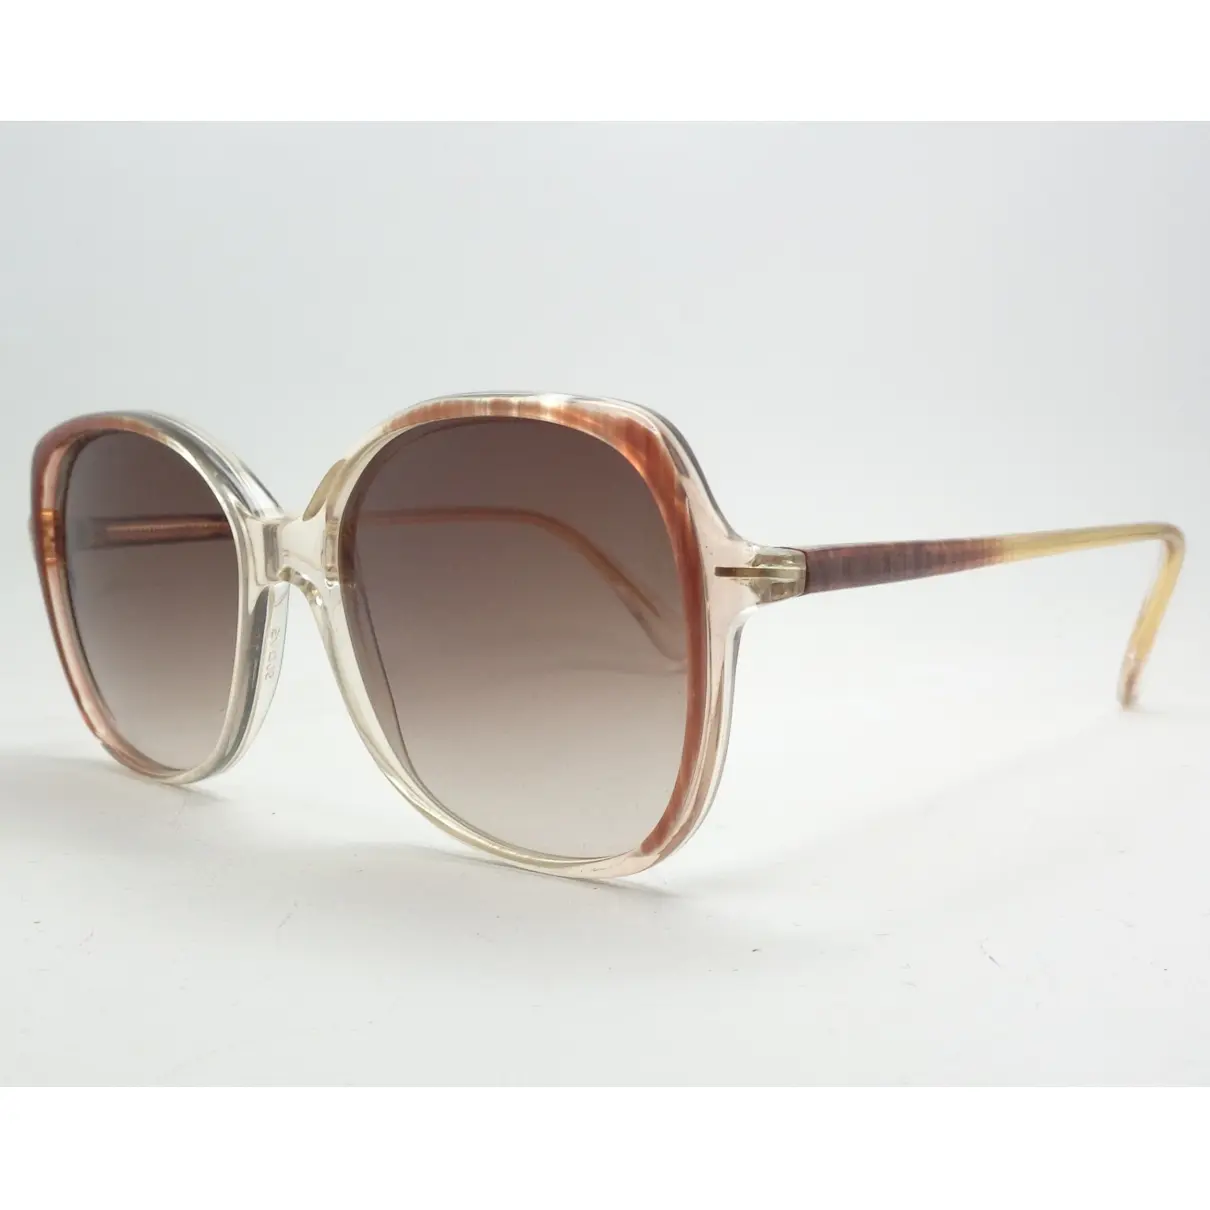 Buy Lozza Sunglasses online - Vintage